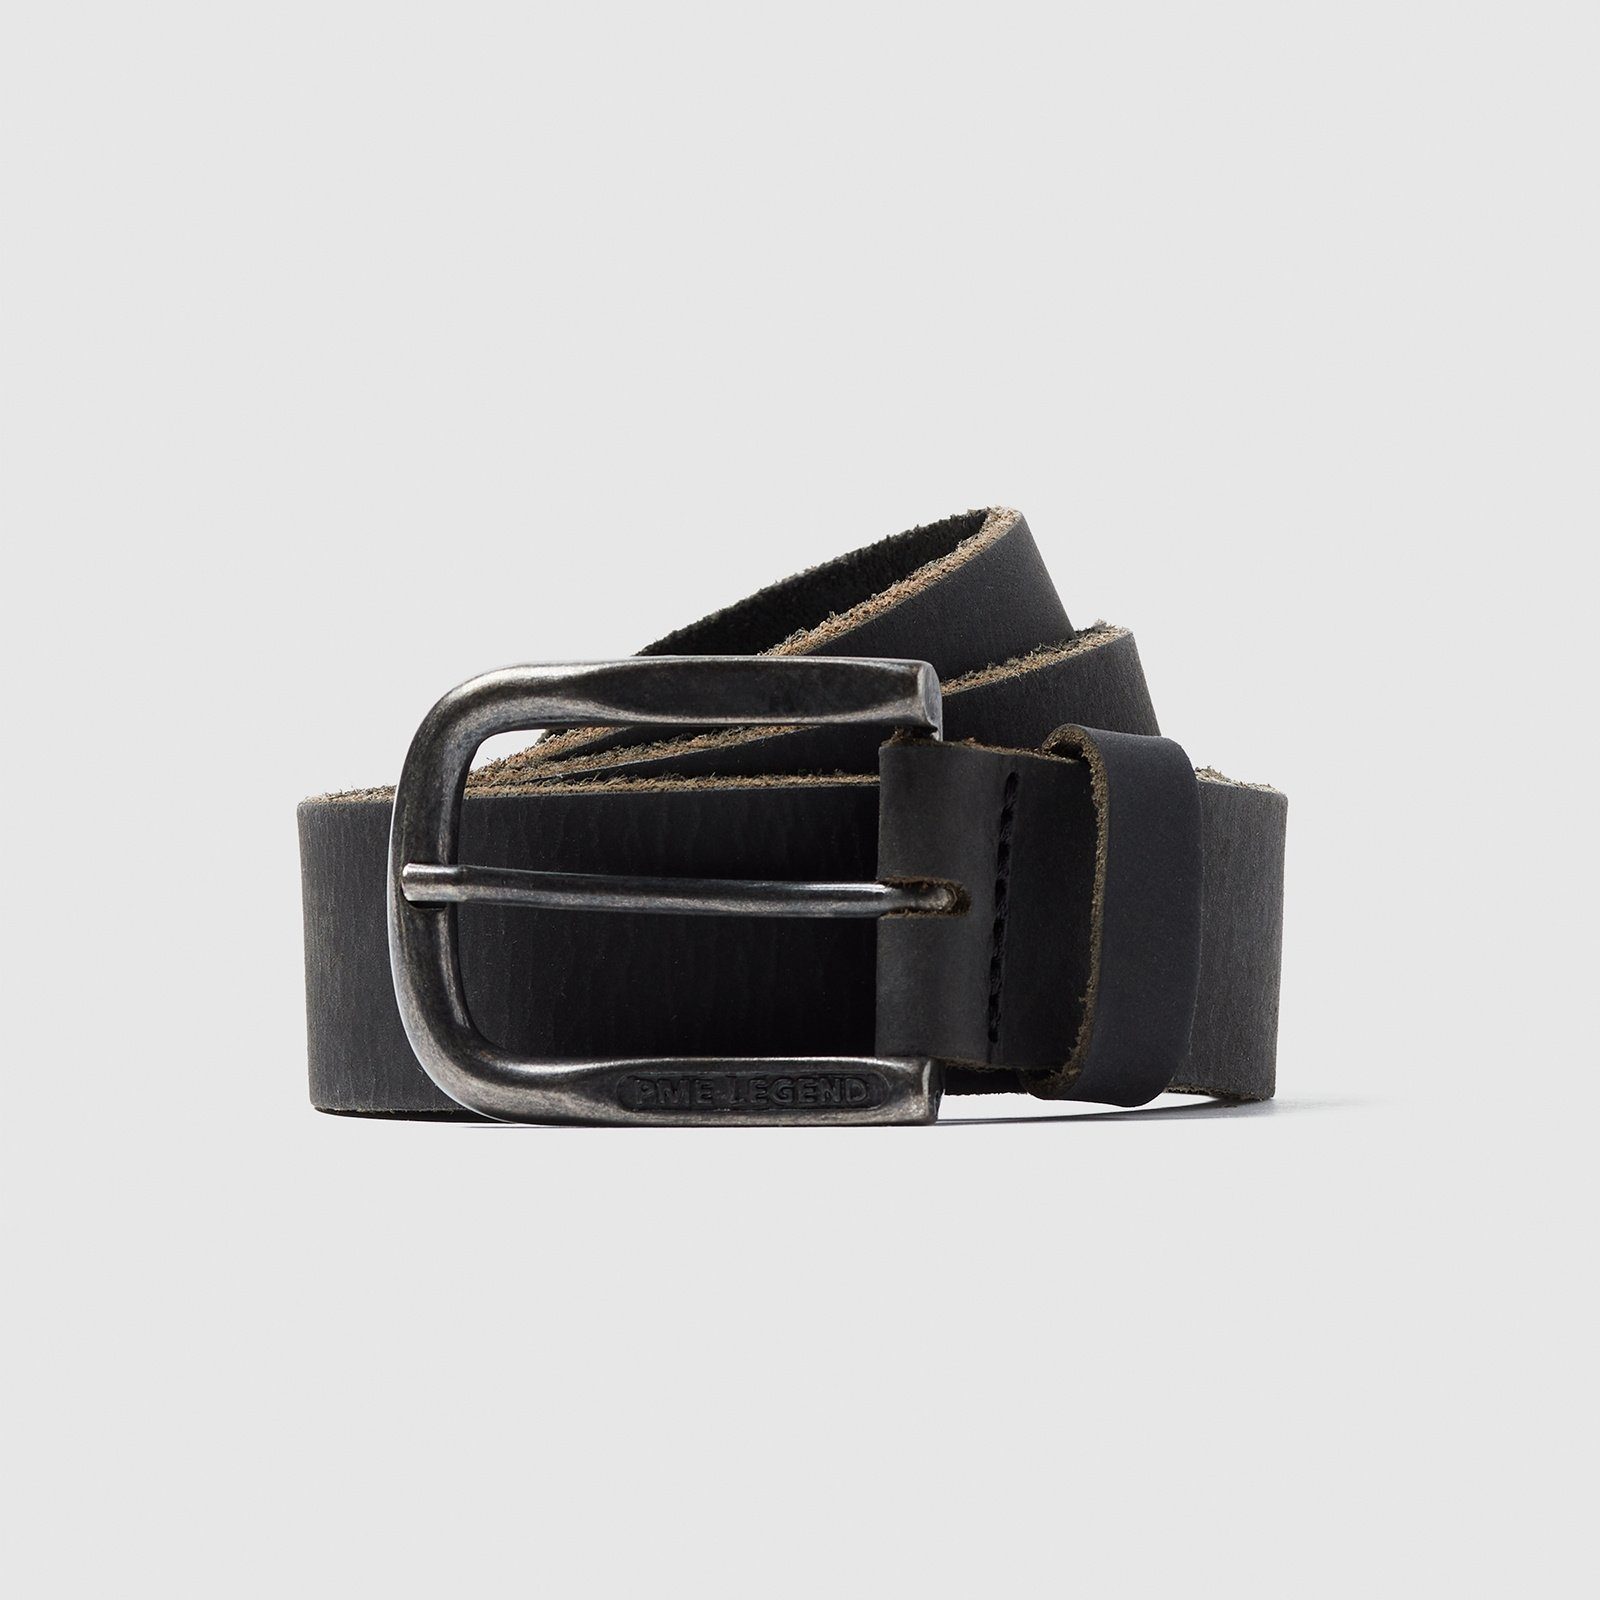 PME LEGEND Ledergürtel Belt Leather belt black | Gürtel